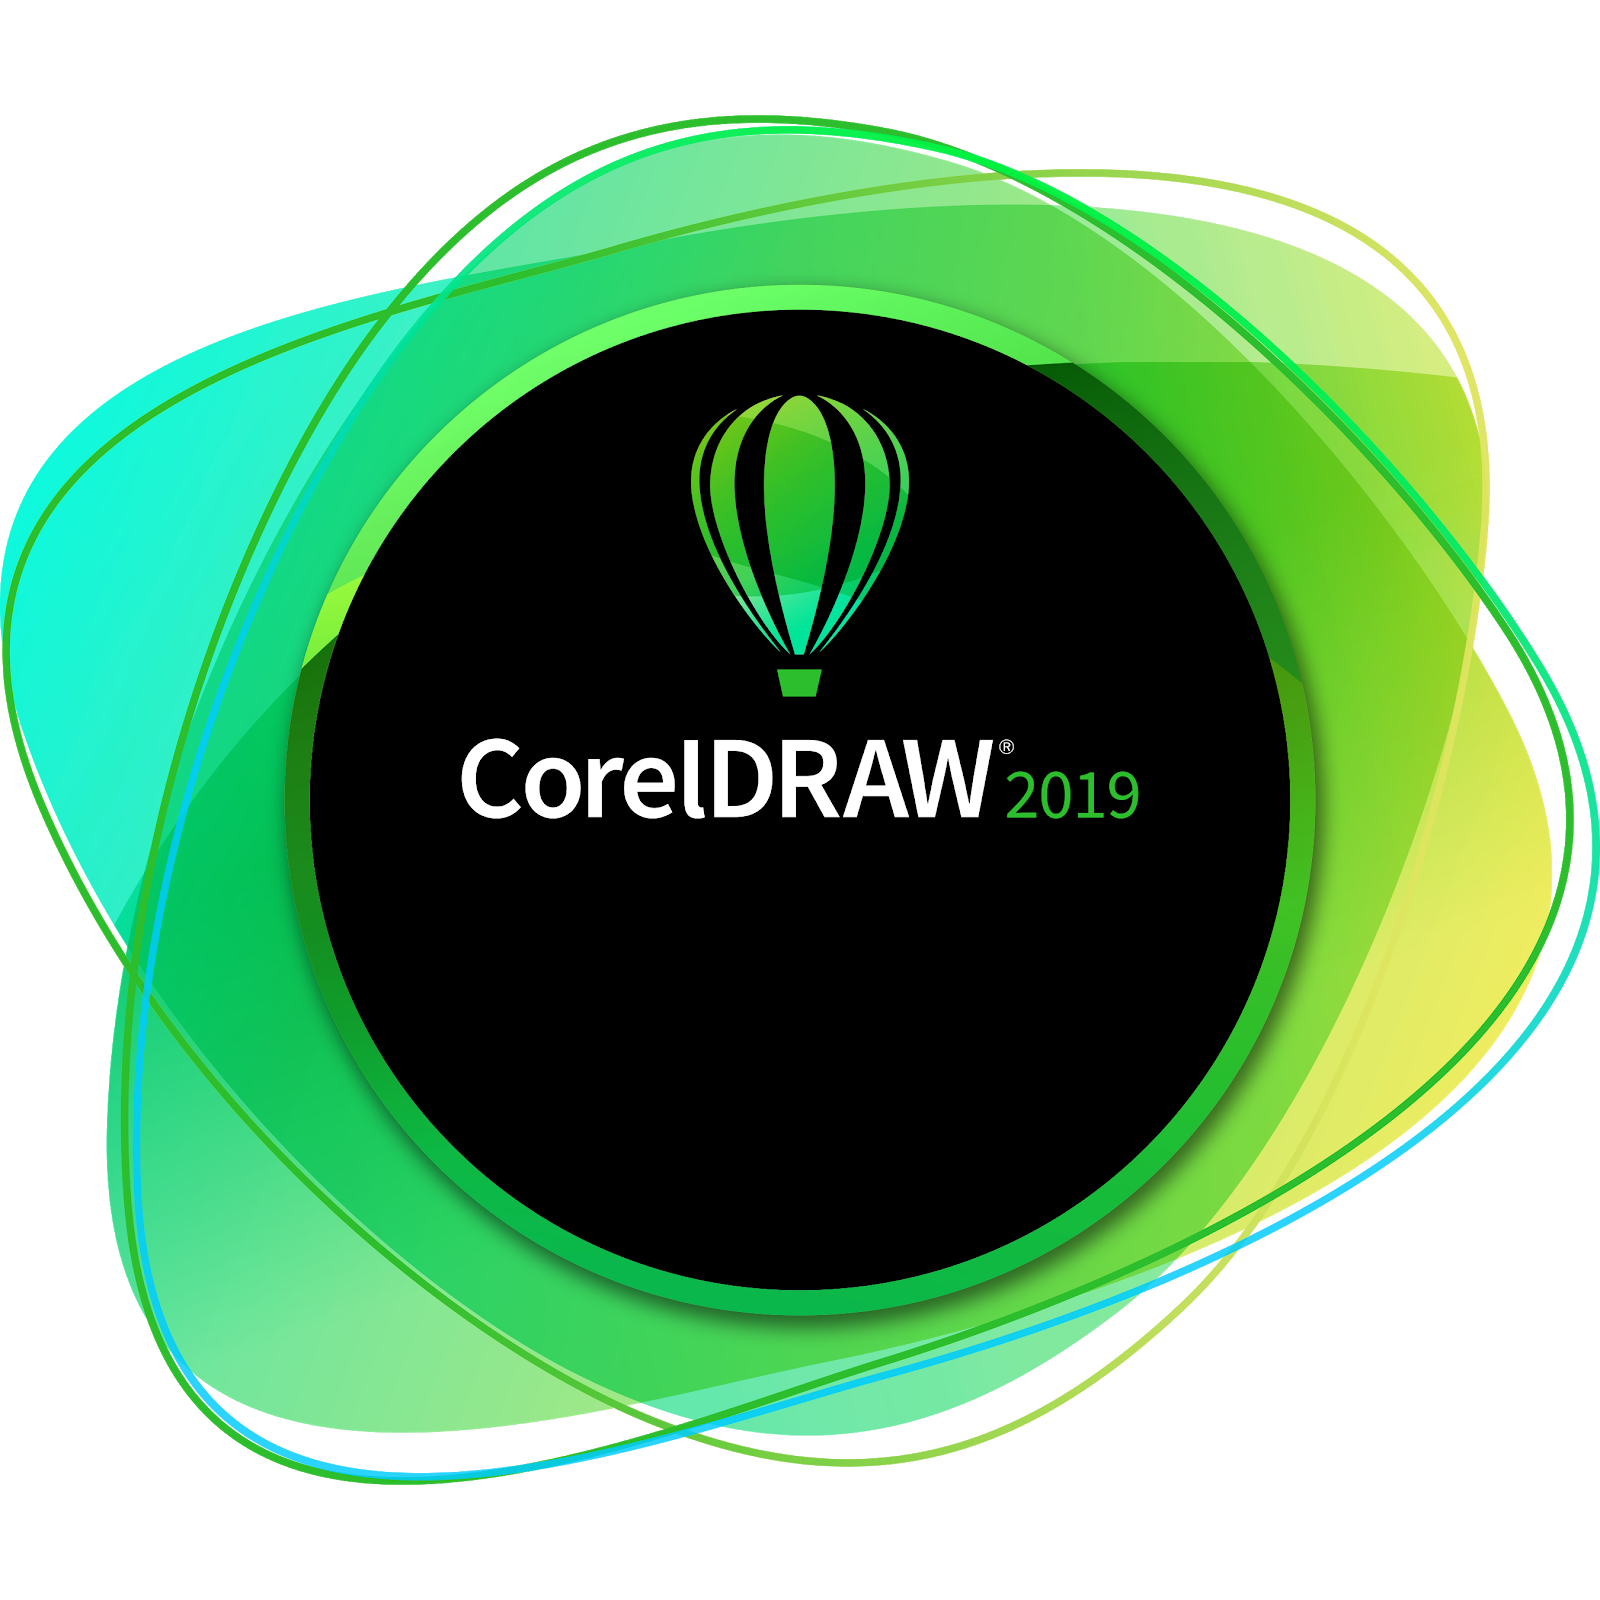 Corl. Coreldraw. Coreldraw логотип. Corel значок. Coreldraw 2019.